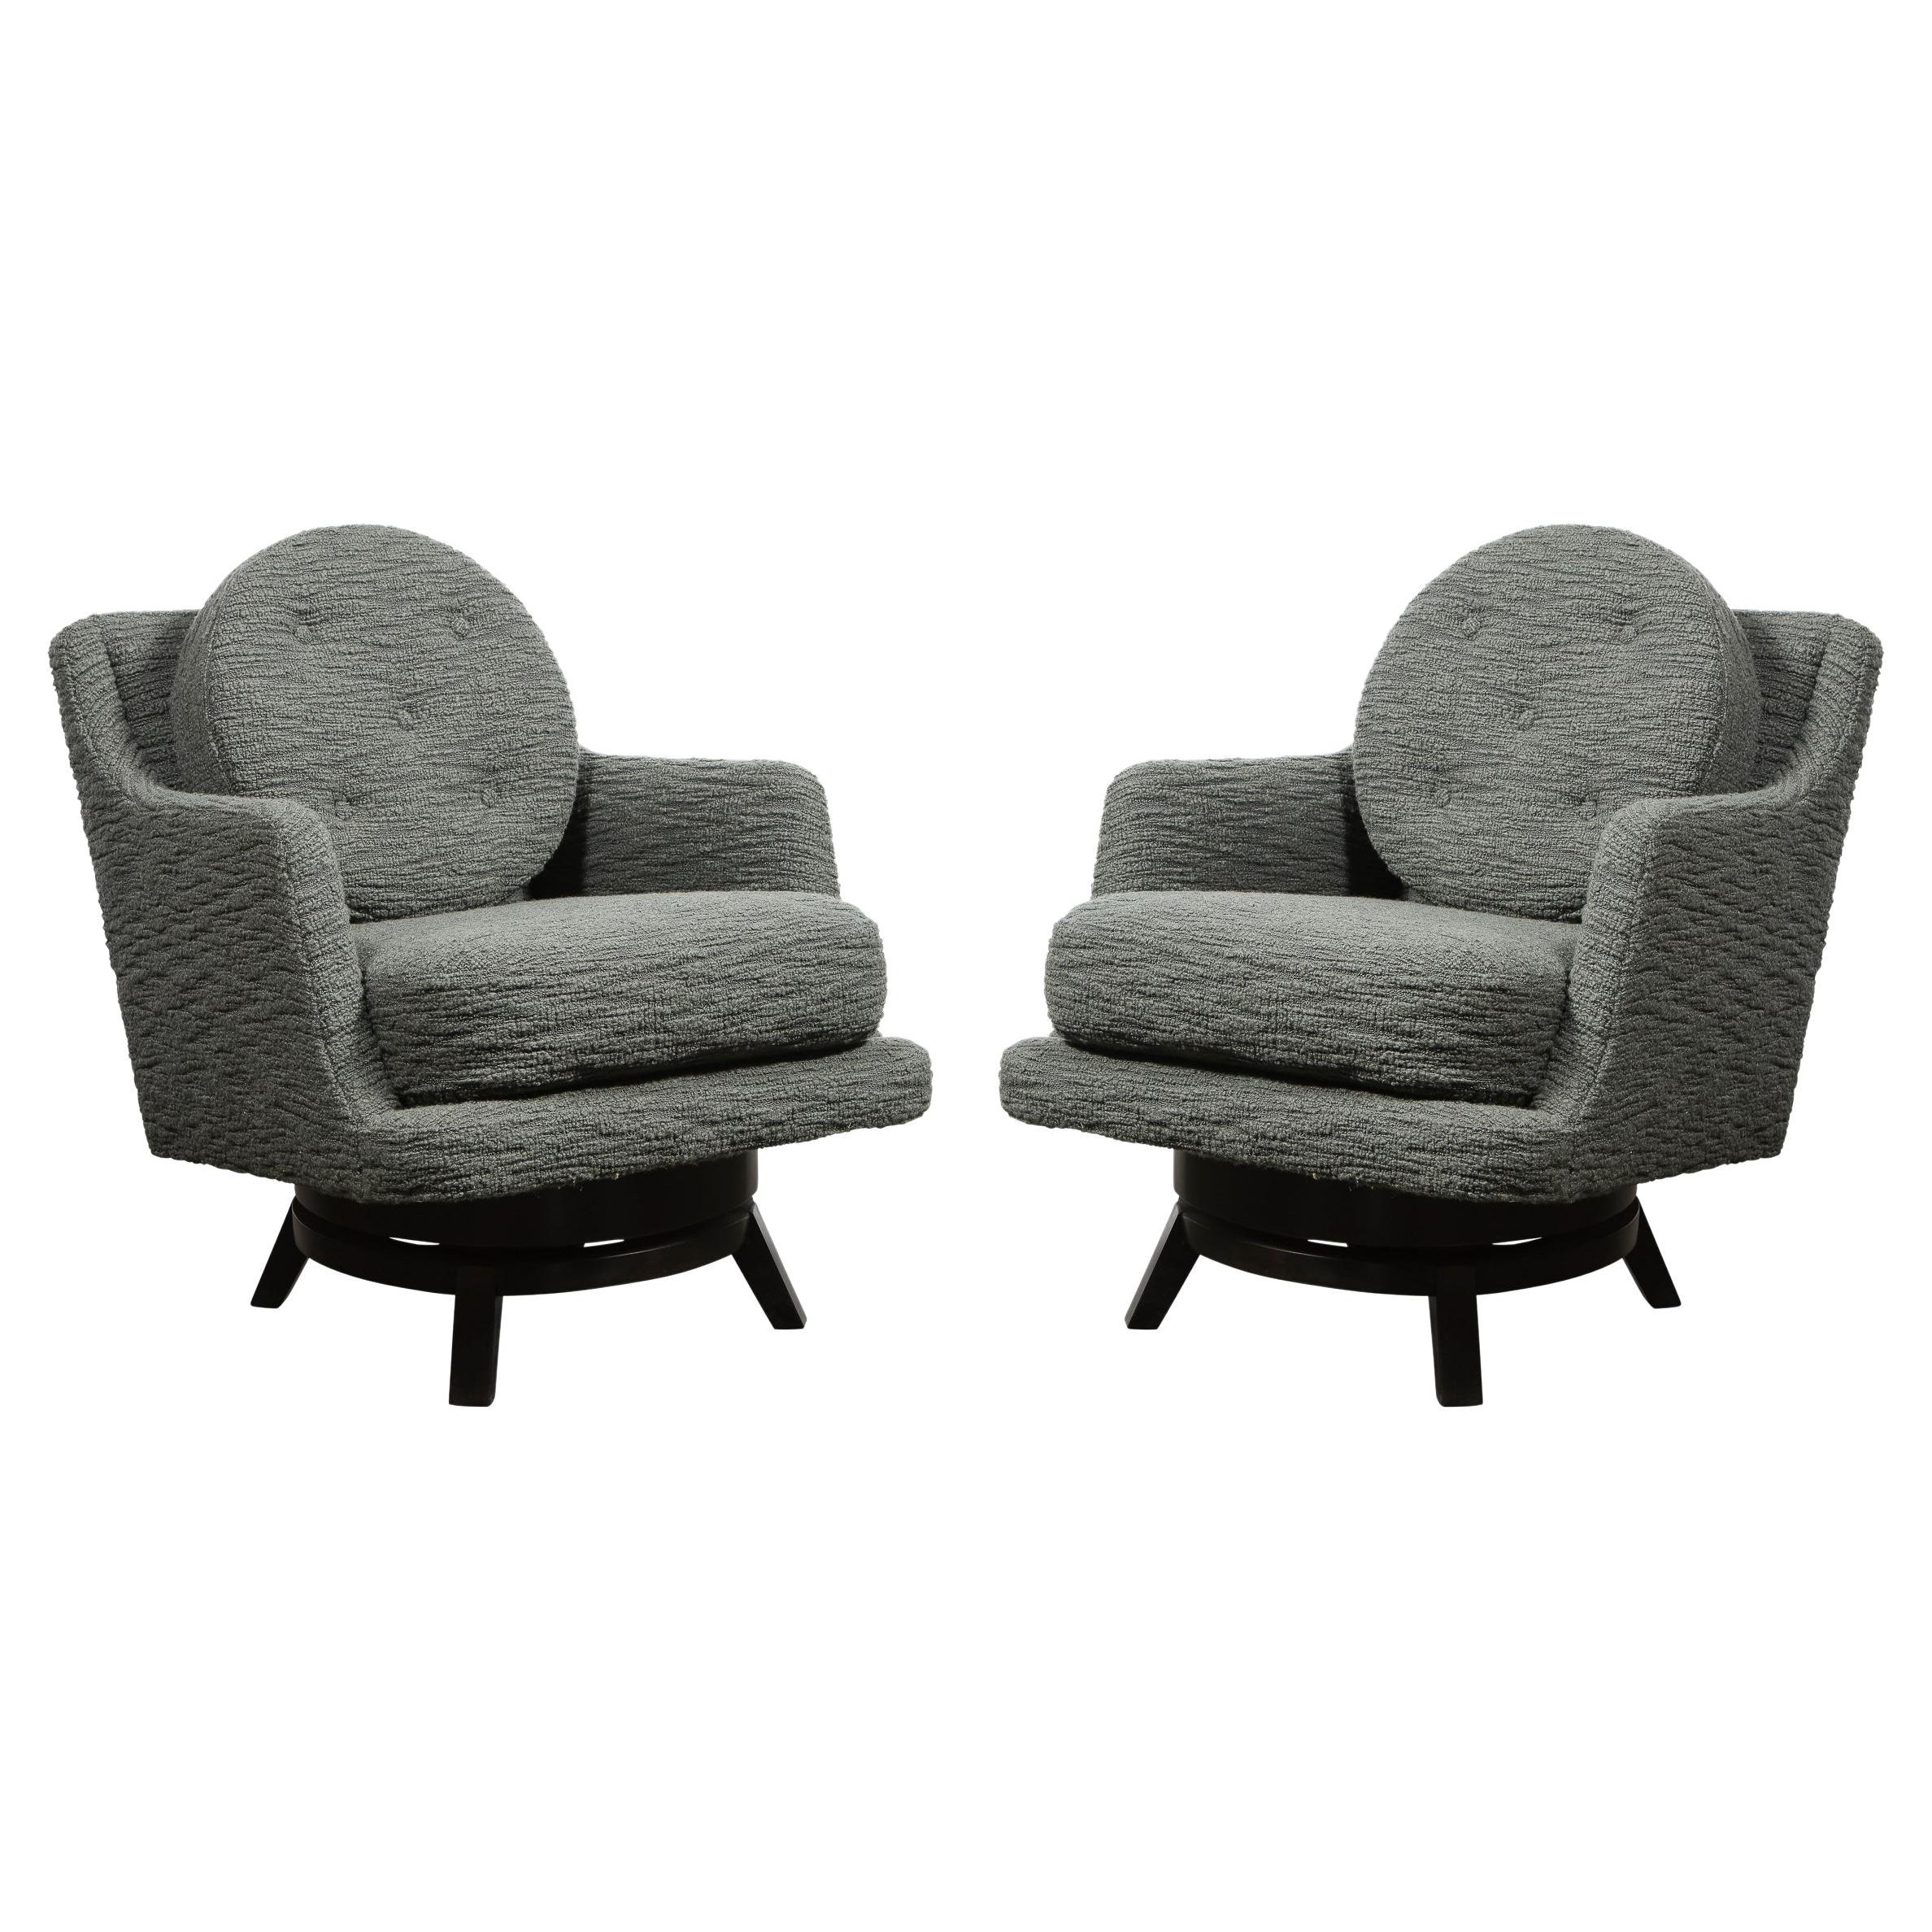 Pair of Edward Wormley Swivel Chairs 'Model #5609' for Dunbar